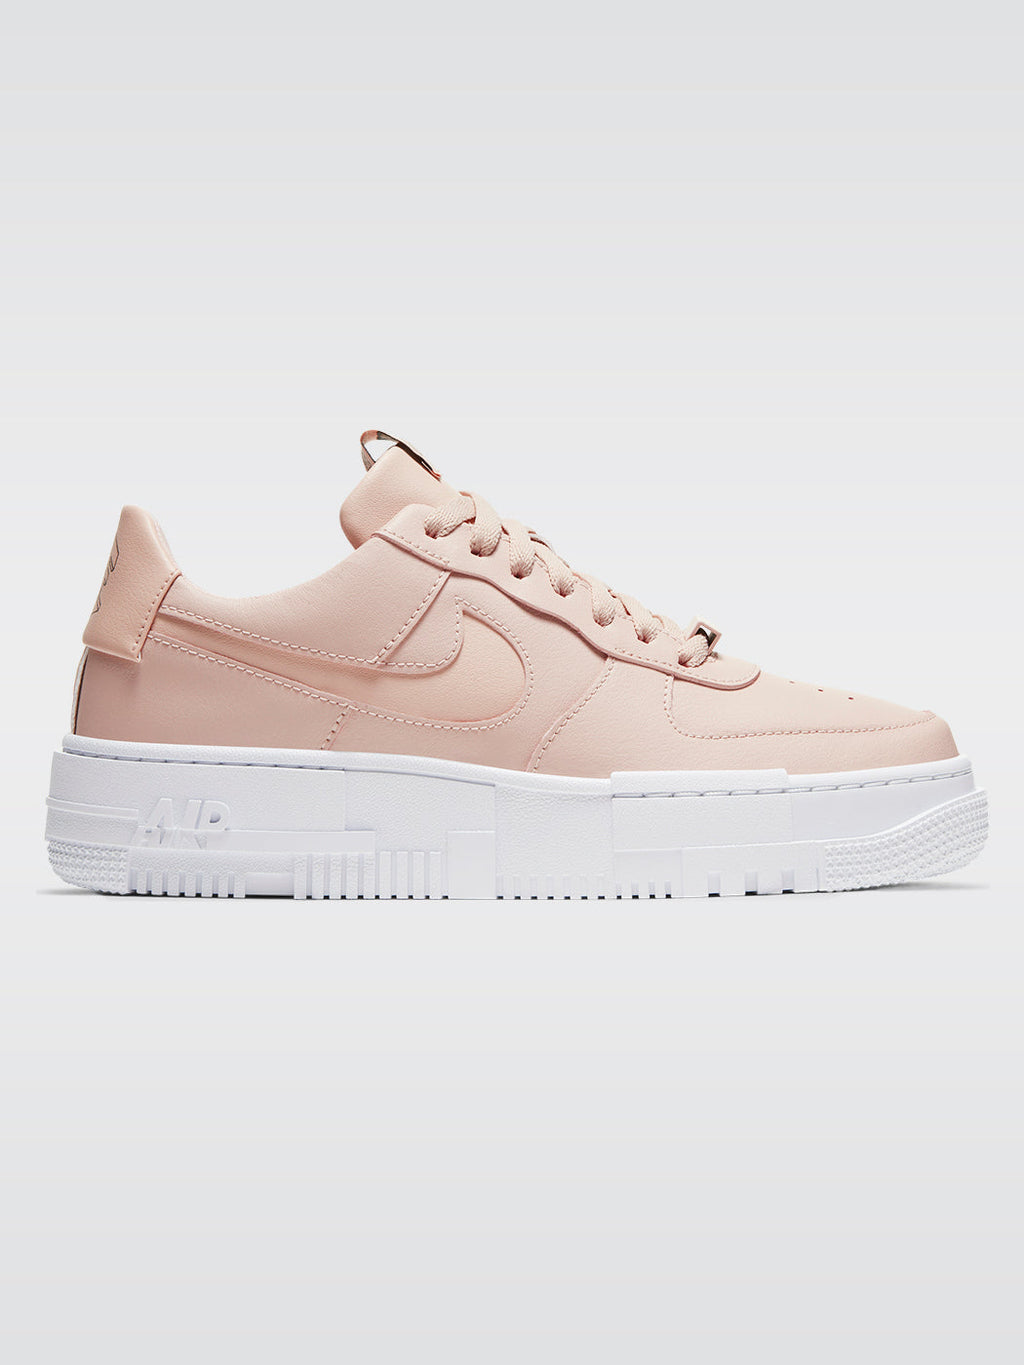 Nike Women's Air Force 1 Pixel SE Shoes